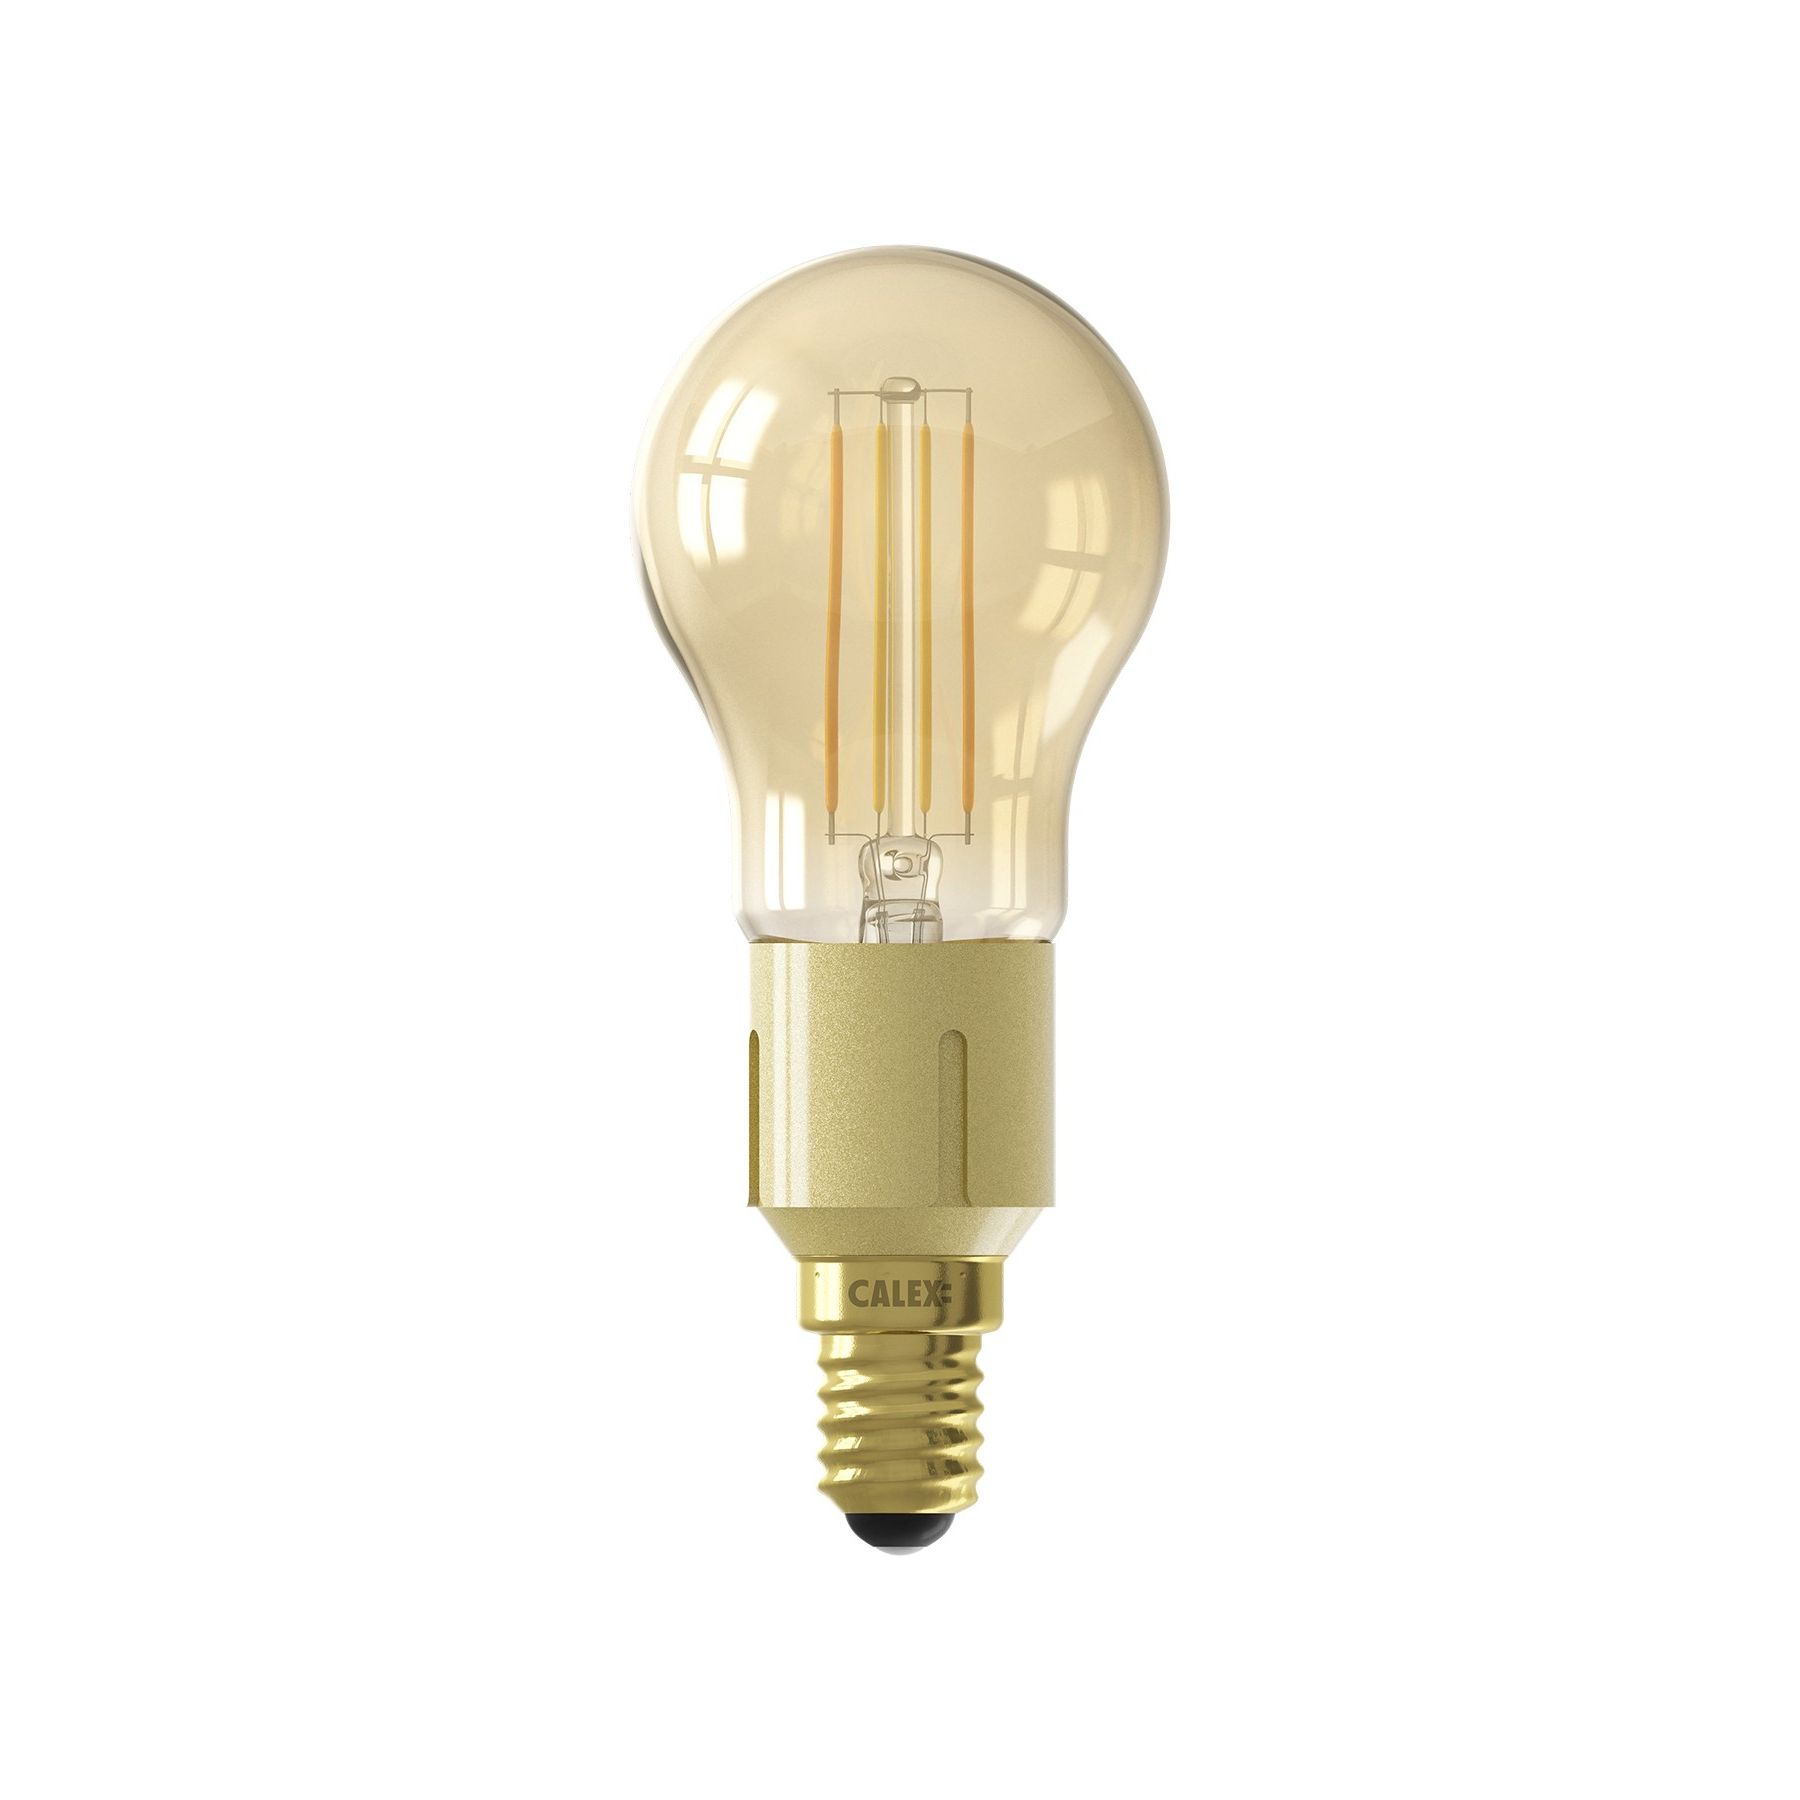 Calex Smart LED lamp Ø 4,5 x 11 cm E14 - 4,5W - dimfunctie via app - 1800 tot 3000K goud | Lichtkoning